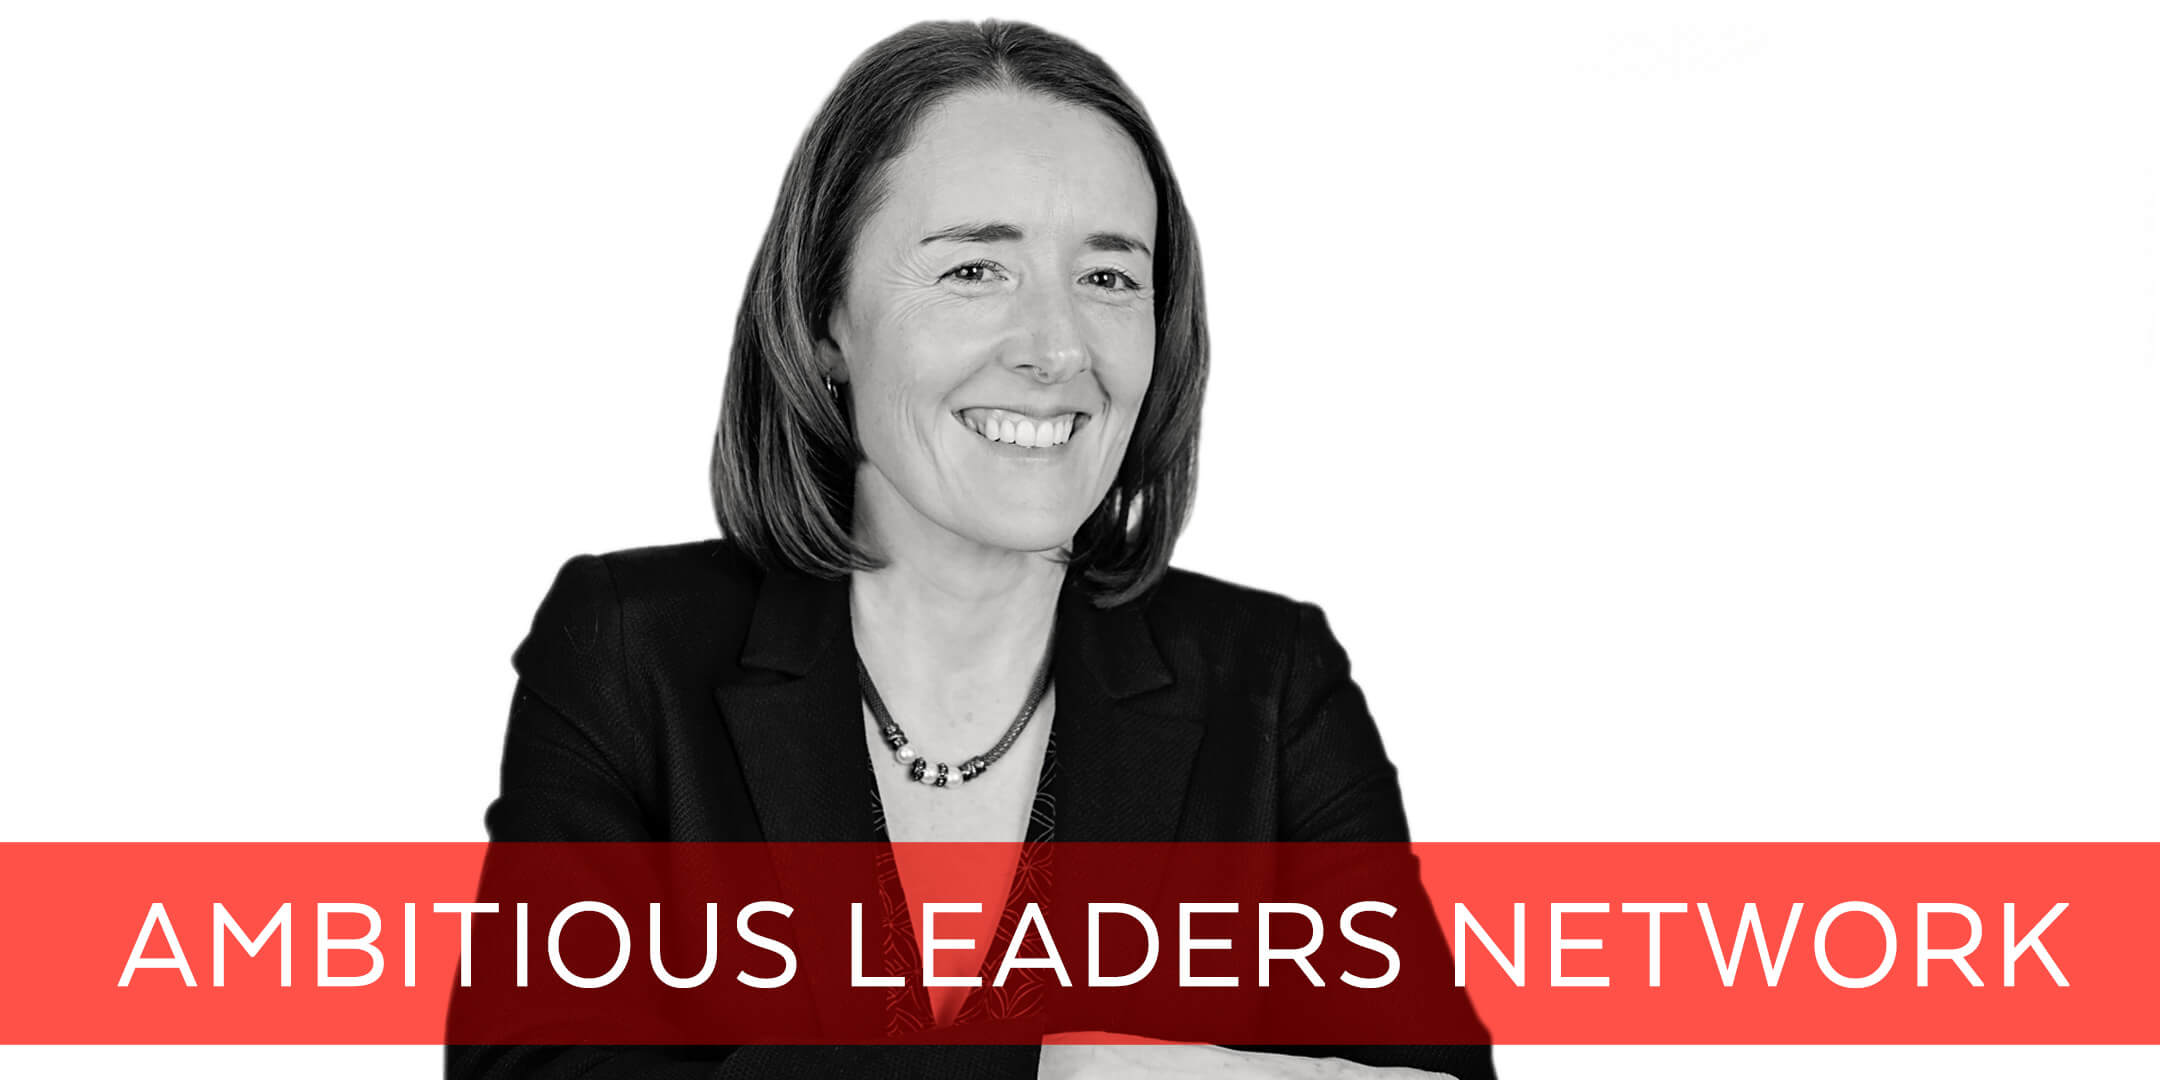 Melanie McCarthy - Speaker At The Ambitious Leaders Network